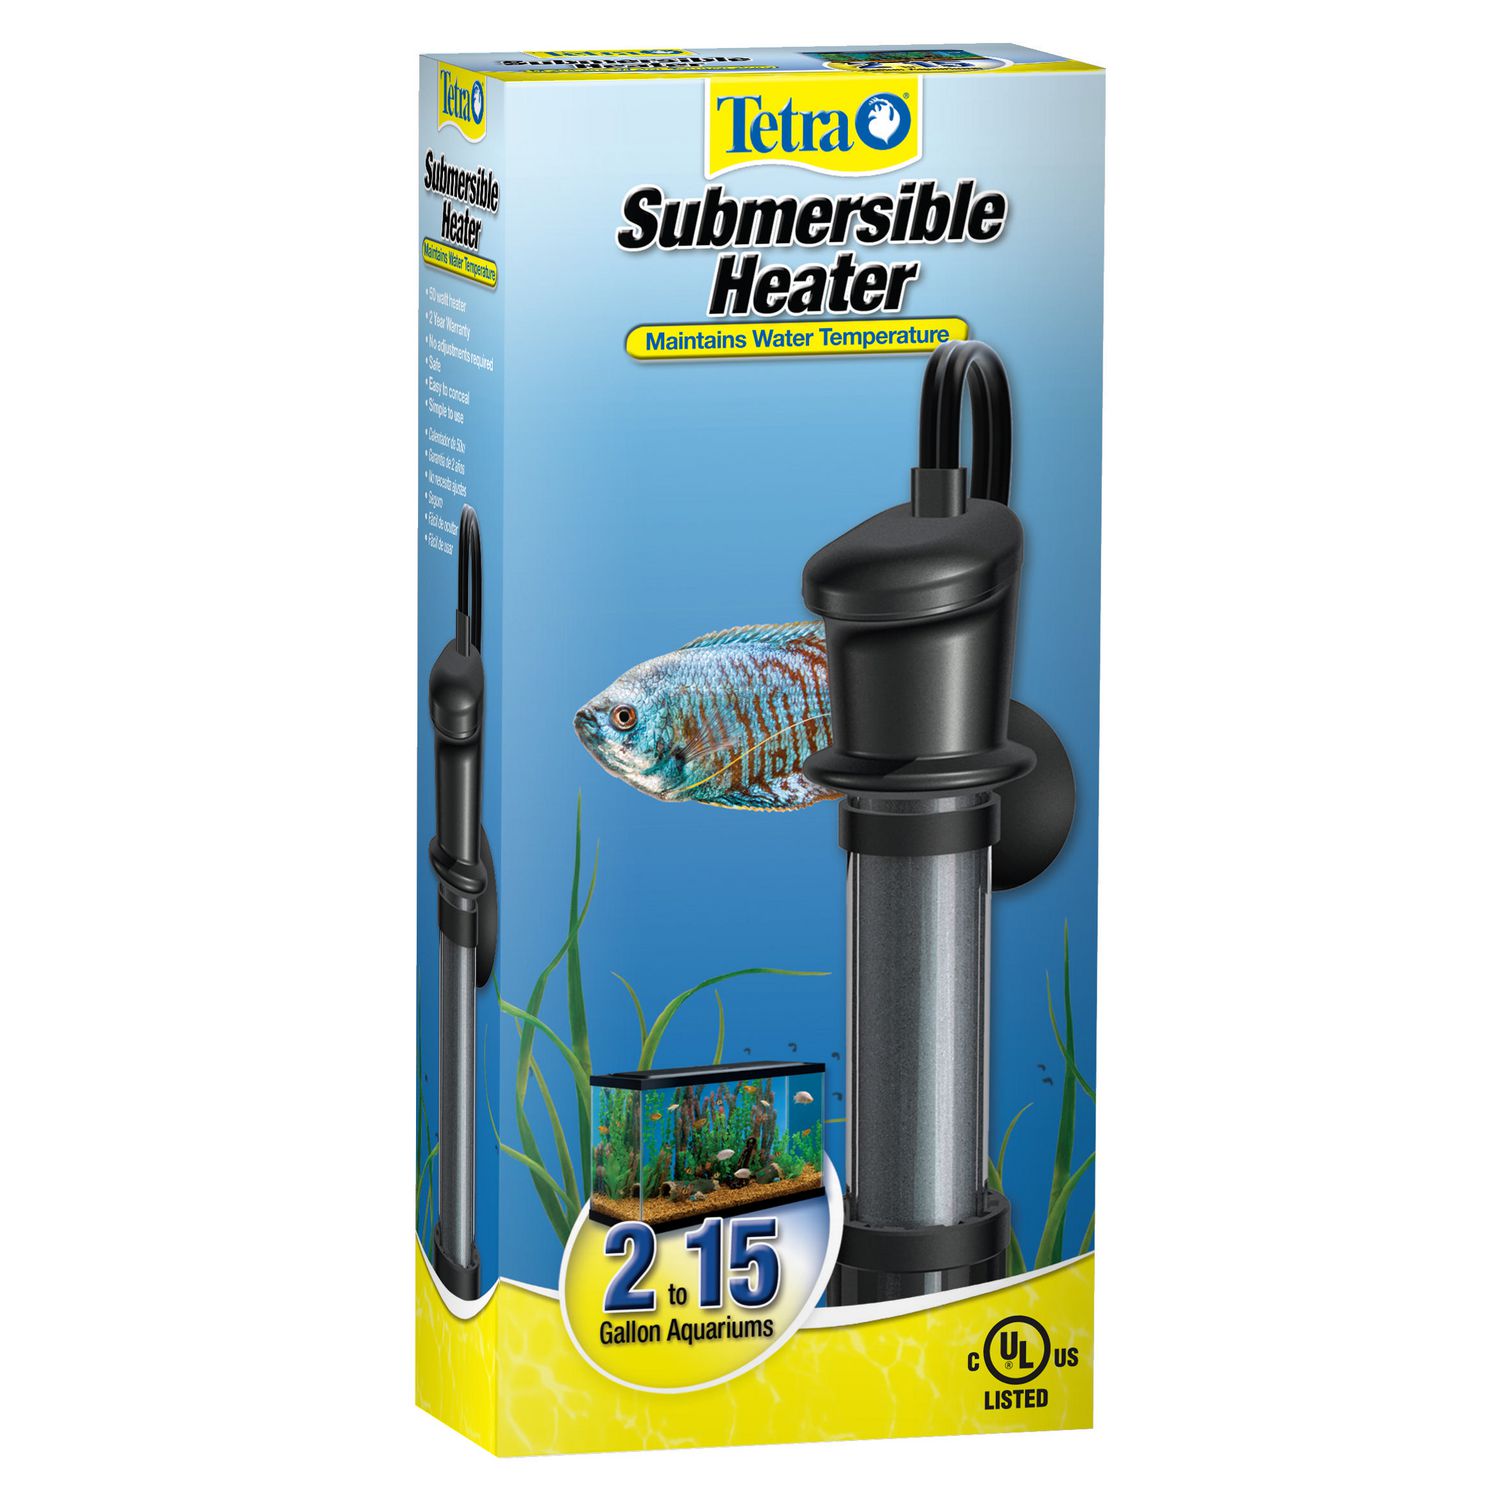 HT-5 fish tank thermometer refrigerator aquarium digital